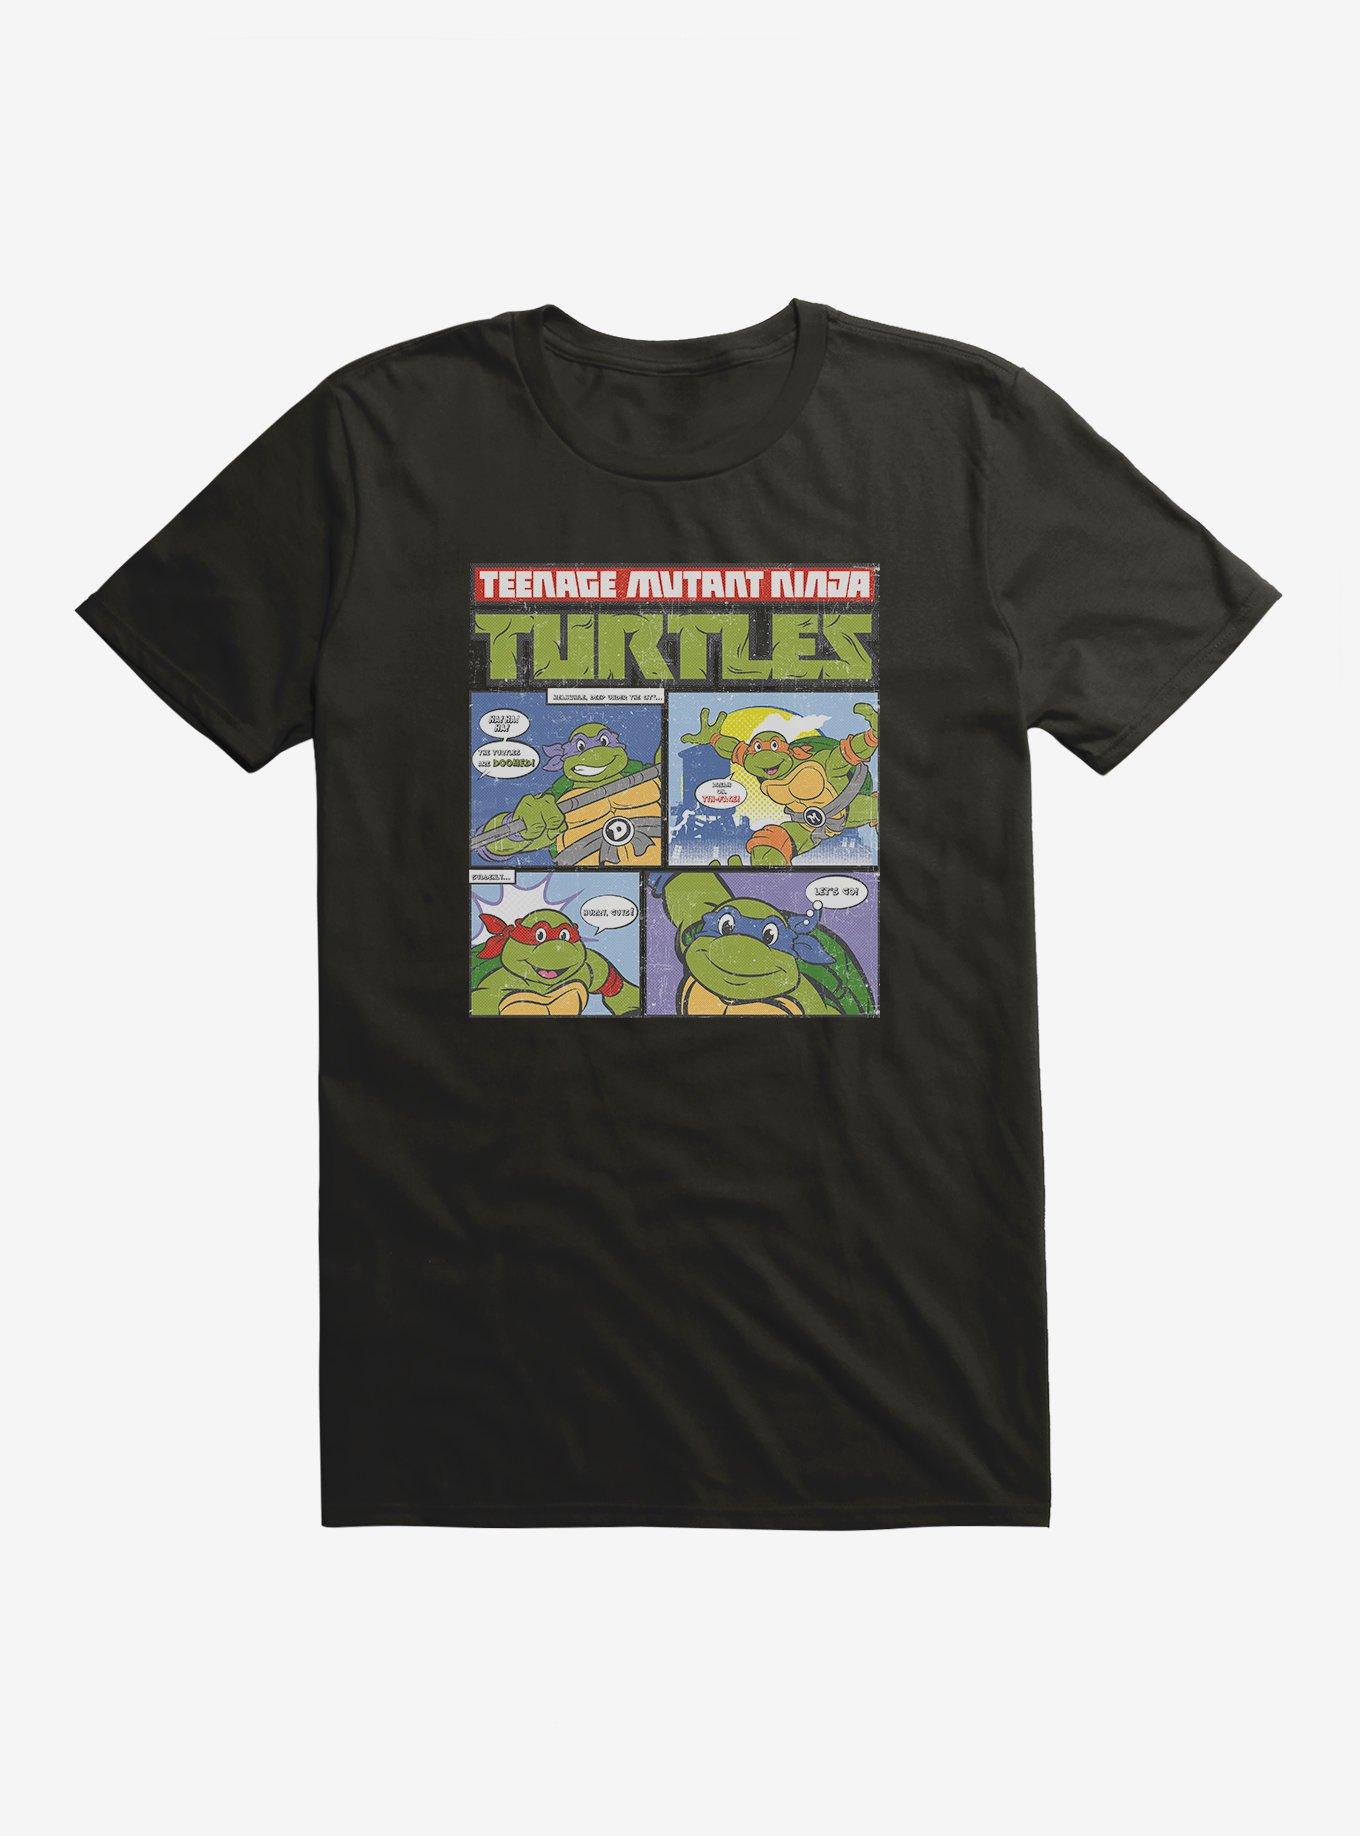 Teenage Mutant Ninja Turtles Comic Strip Group Catchphrases T-Shirt